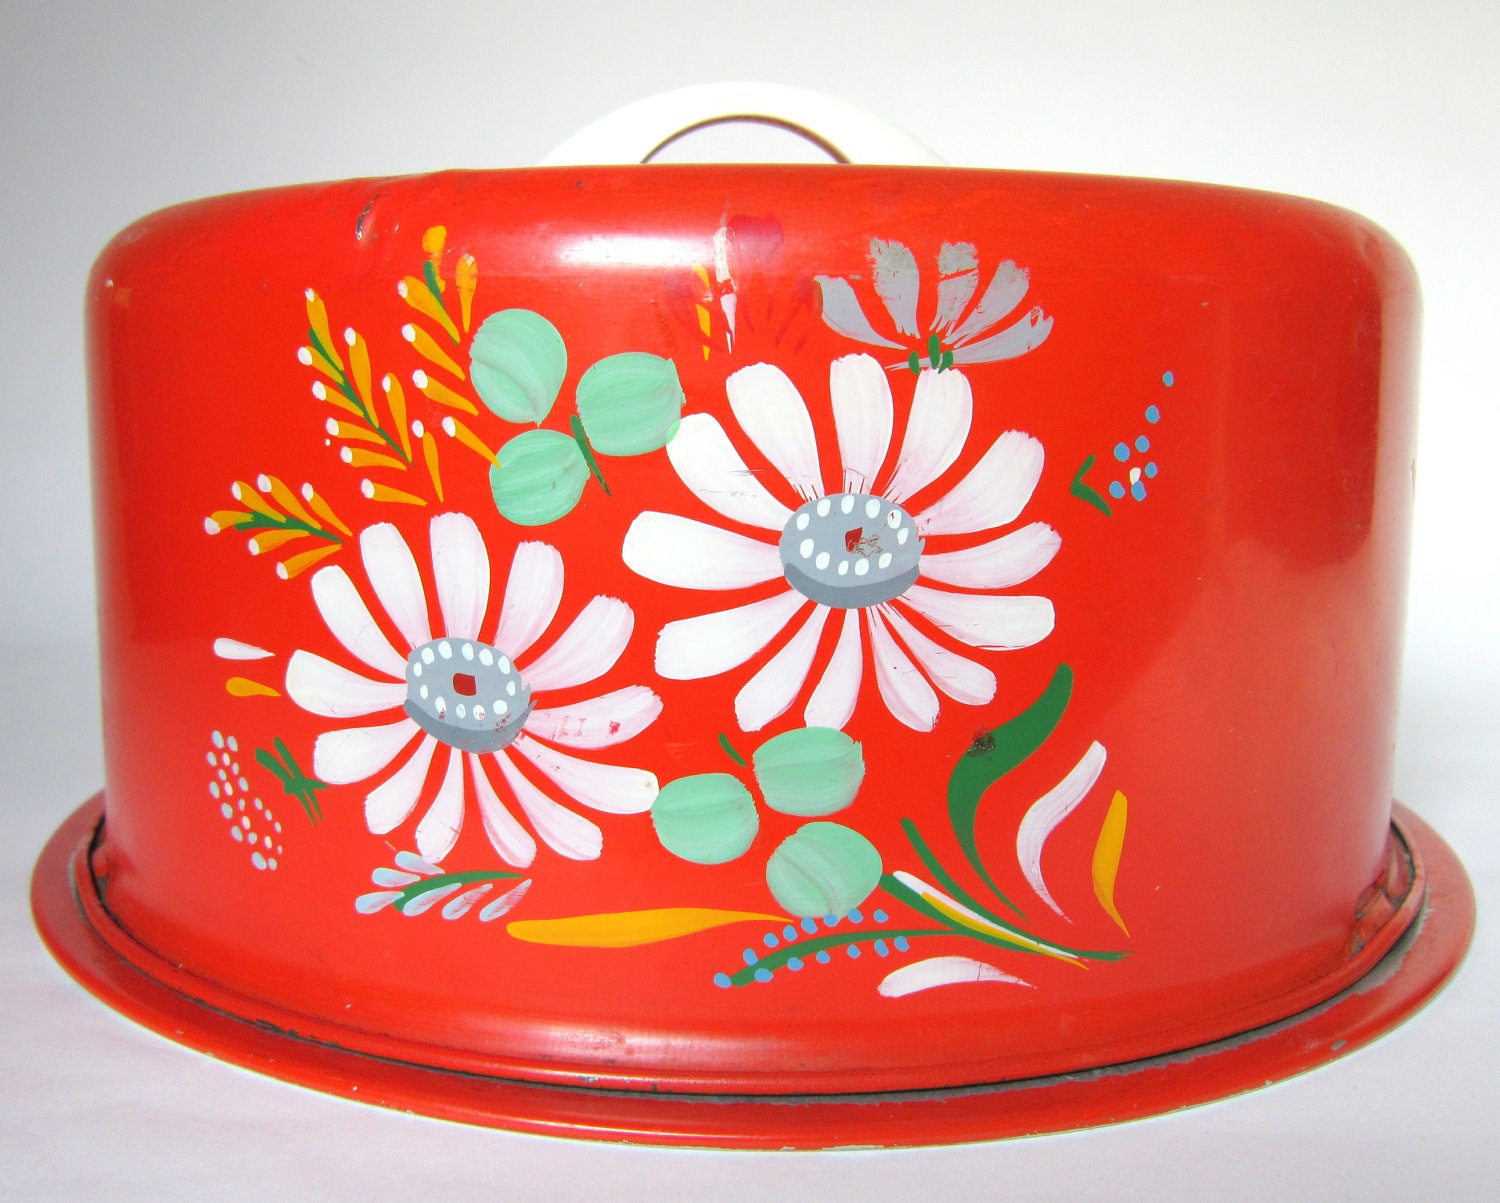 Vintage 1950s Ransburg "Kitchen Bouquet" Cake Carrier, Orange Red with Flowers, Tin Cake Saver Caddy - CedarRunVintage